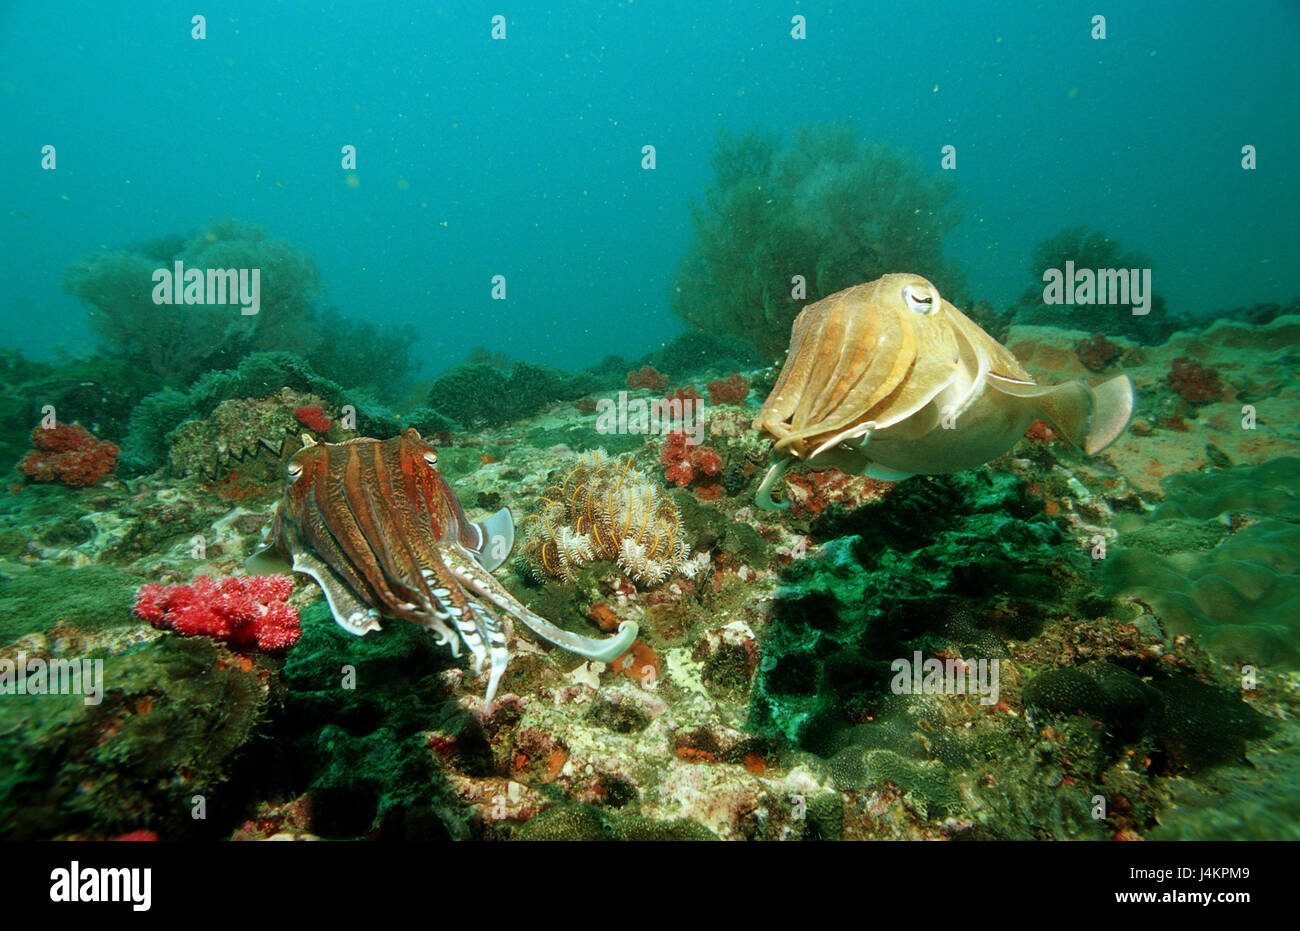 Pharaoh's cuttlefishs, cuttlefish pharaonis Stock Photo